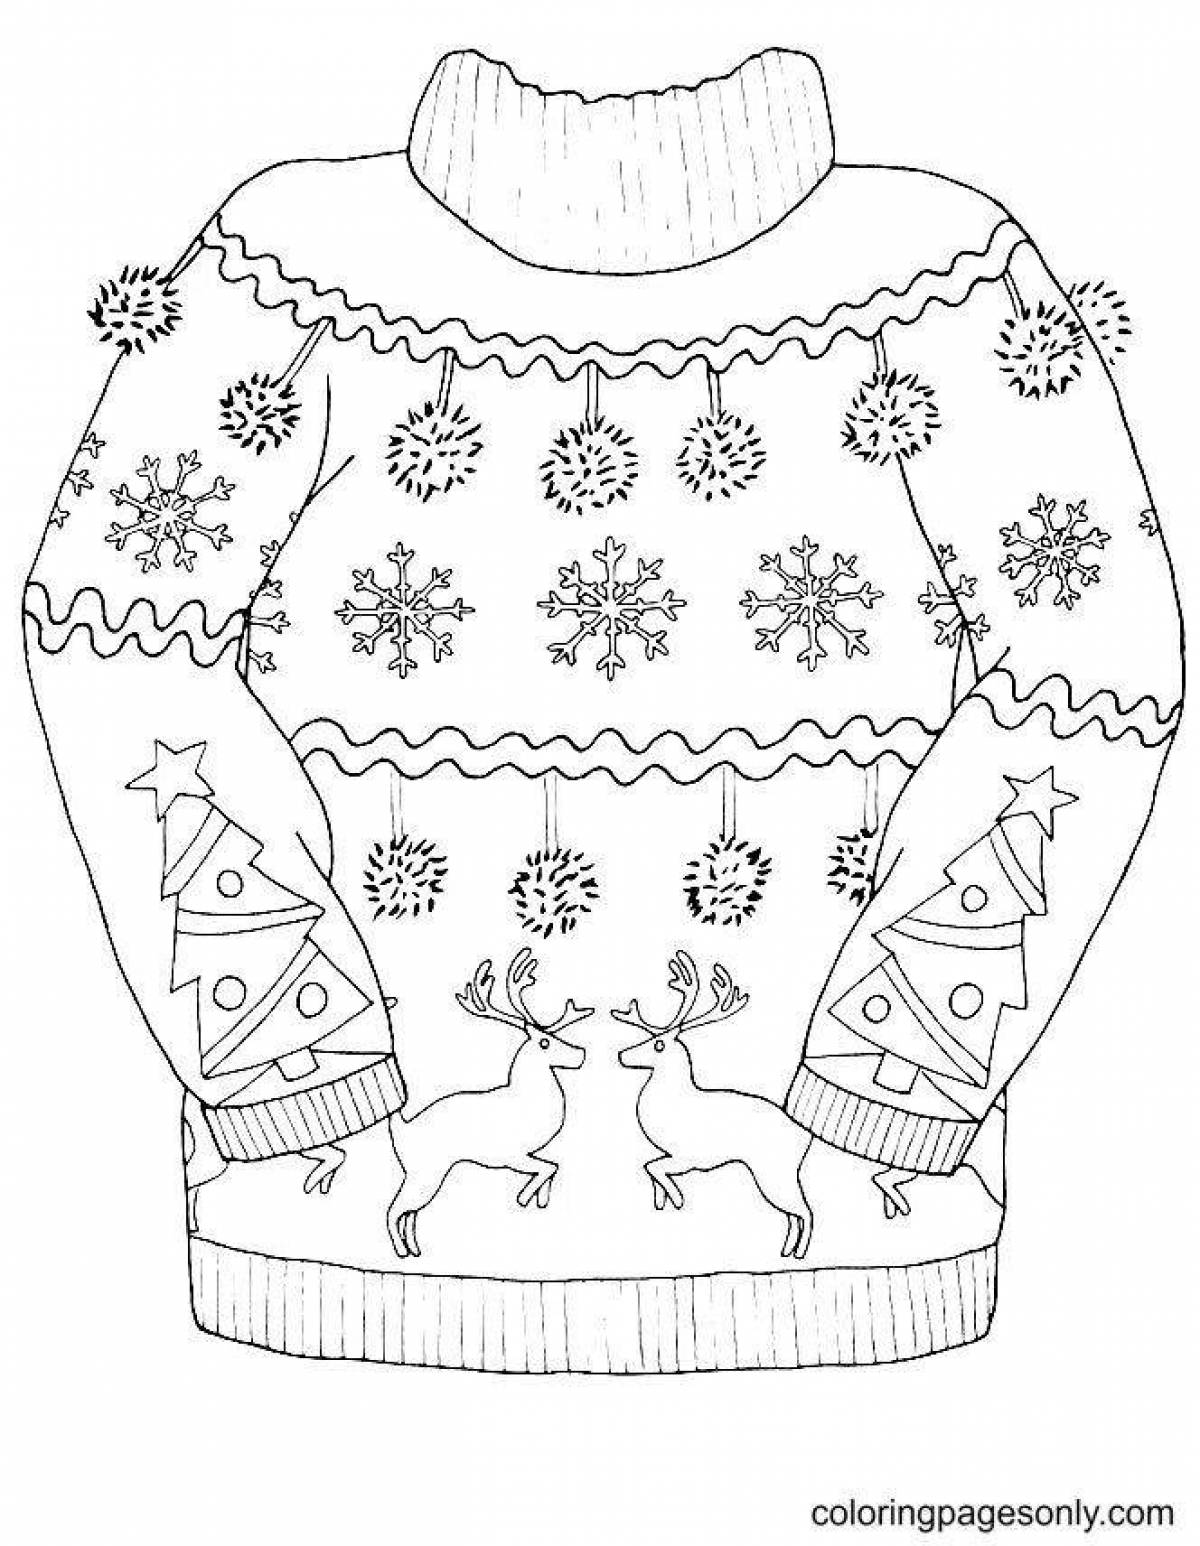 Joyful sweater coloring for kids